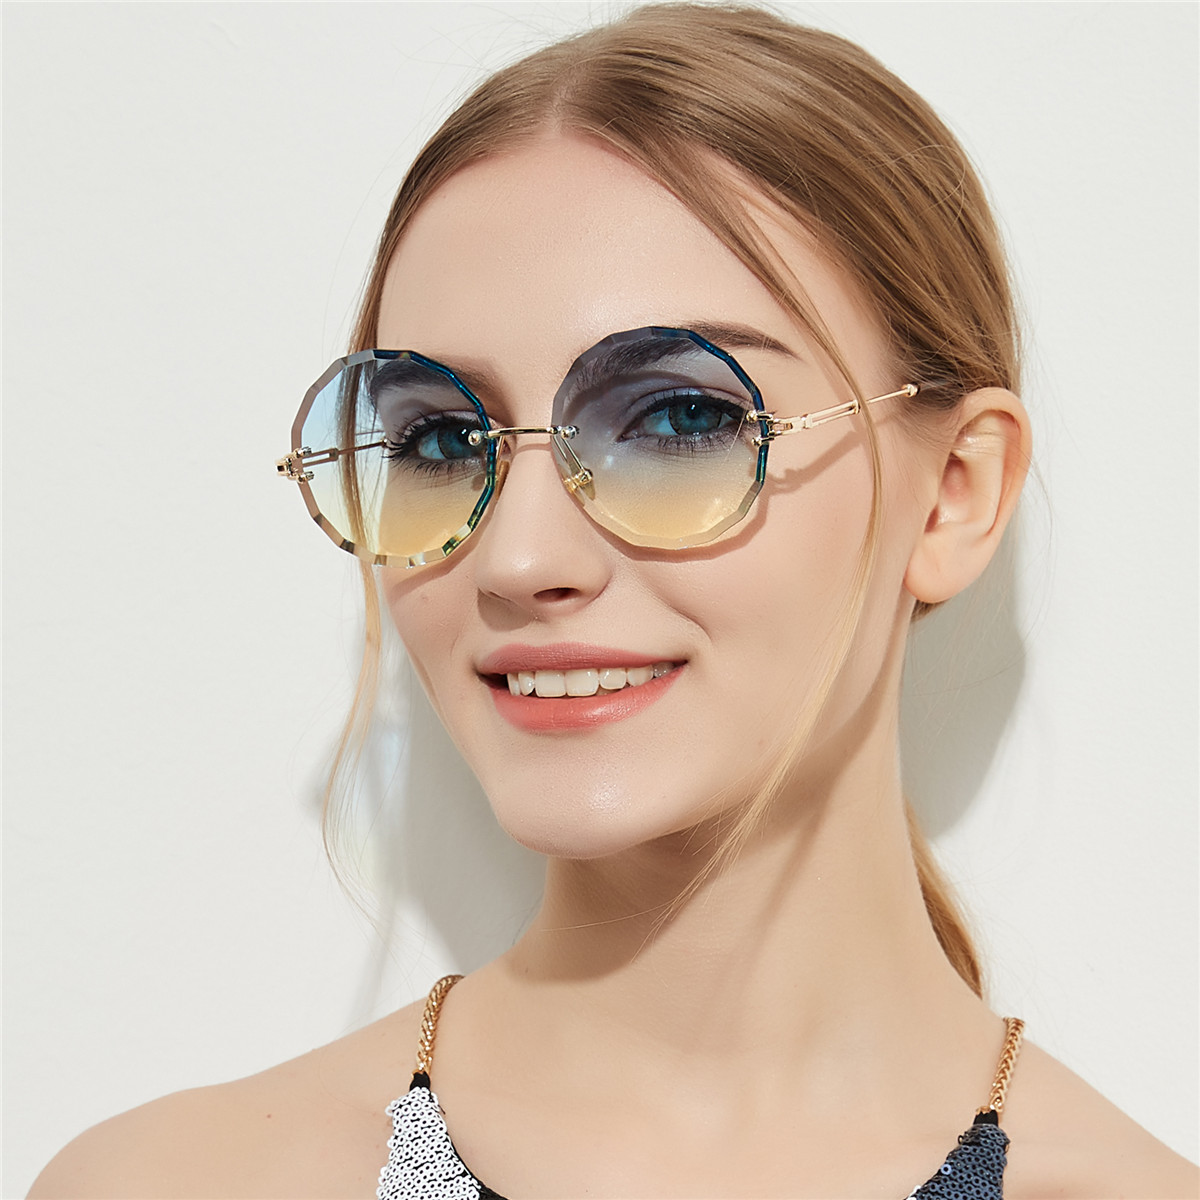 Fashion for glasses